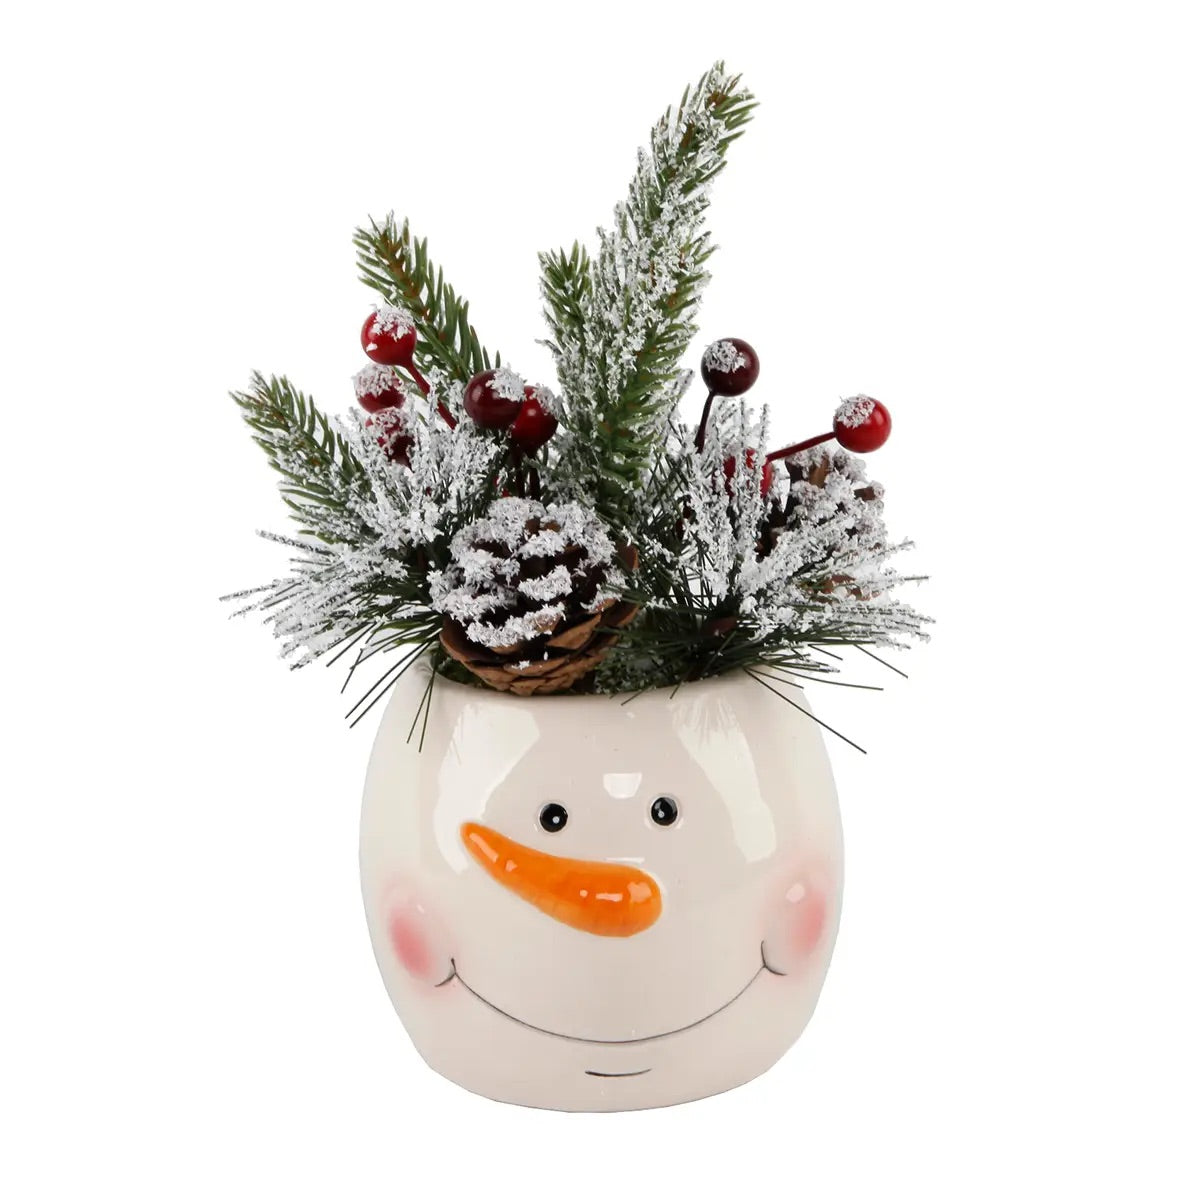 Christmas Arrangement in Ceramic Snowman Pot